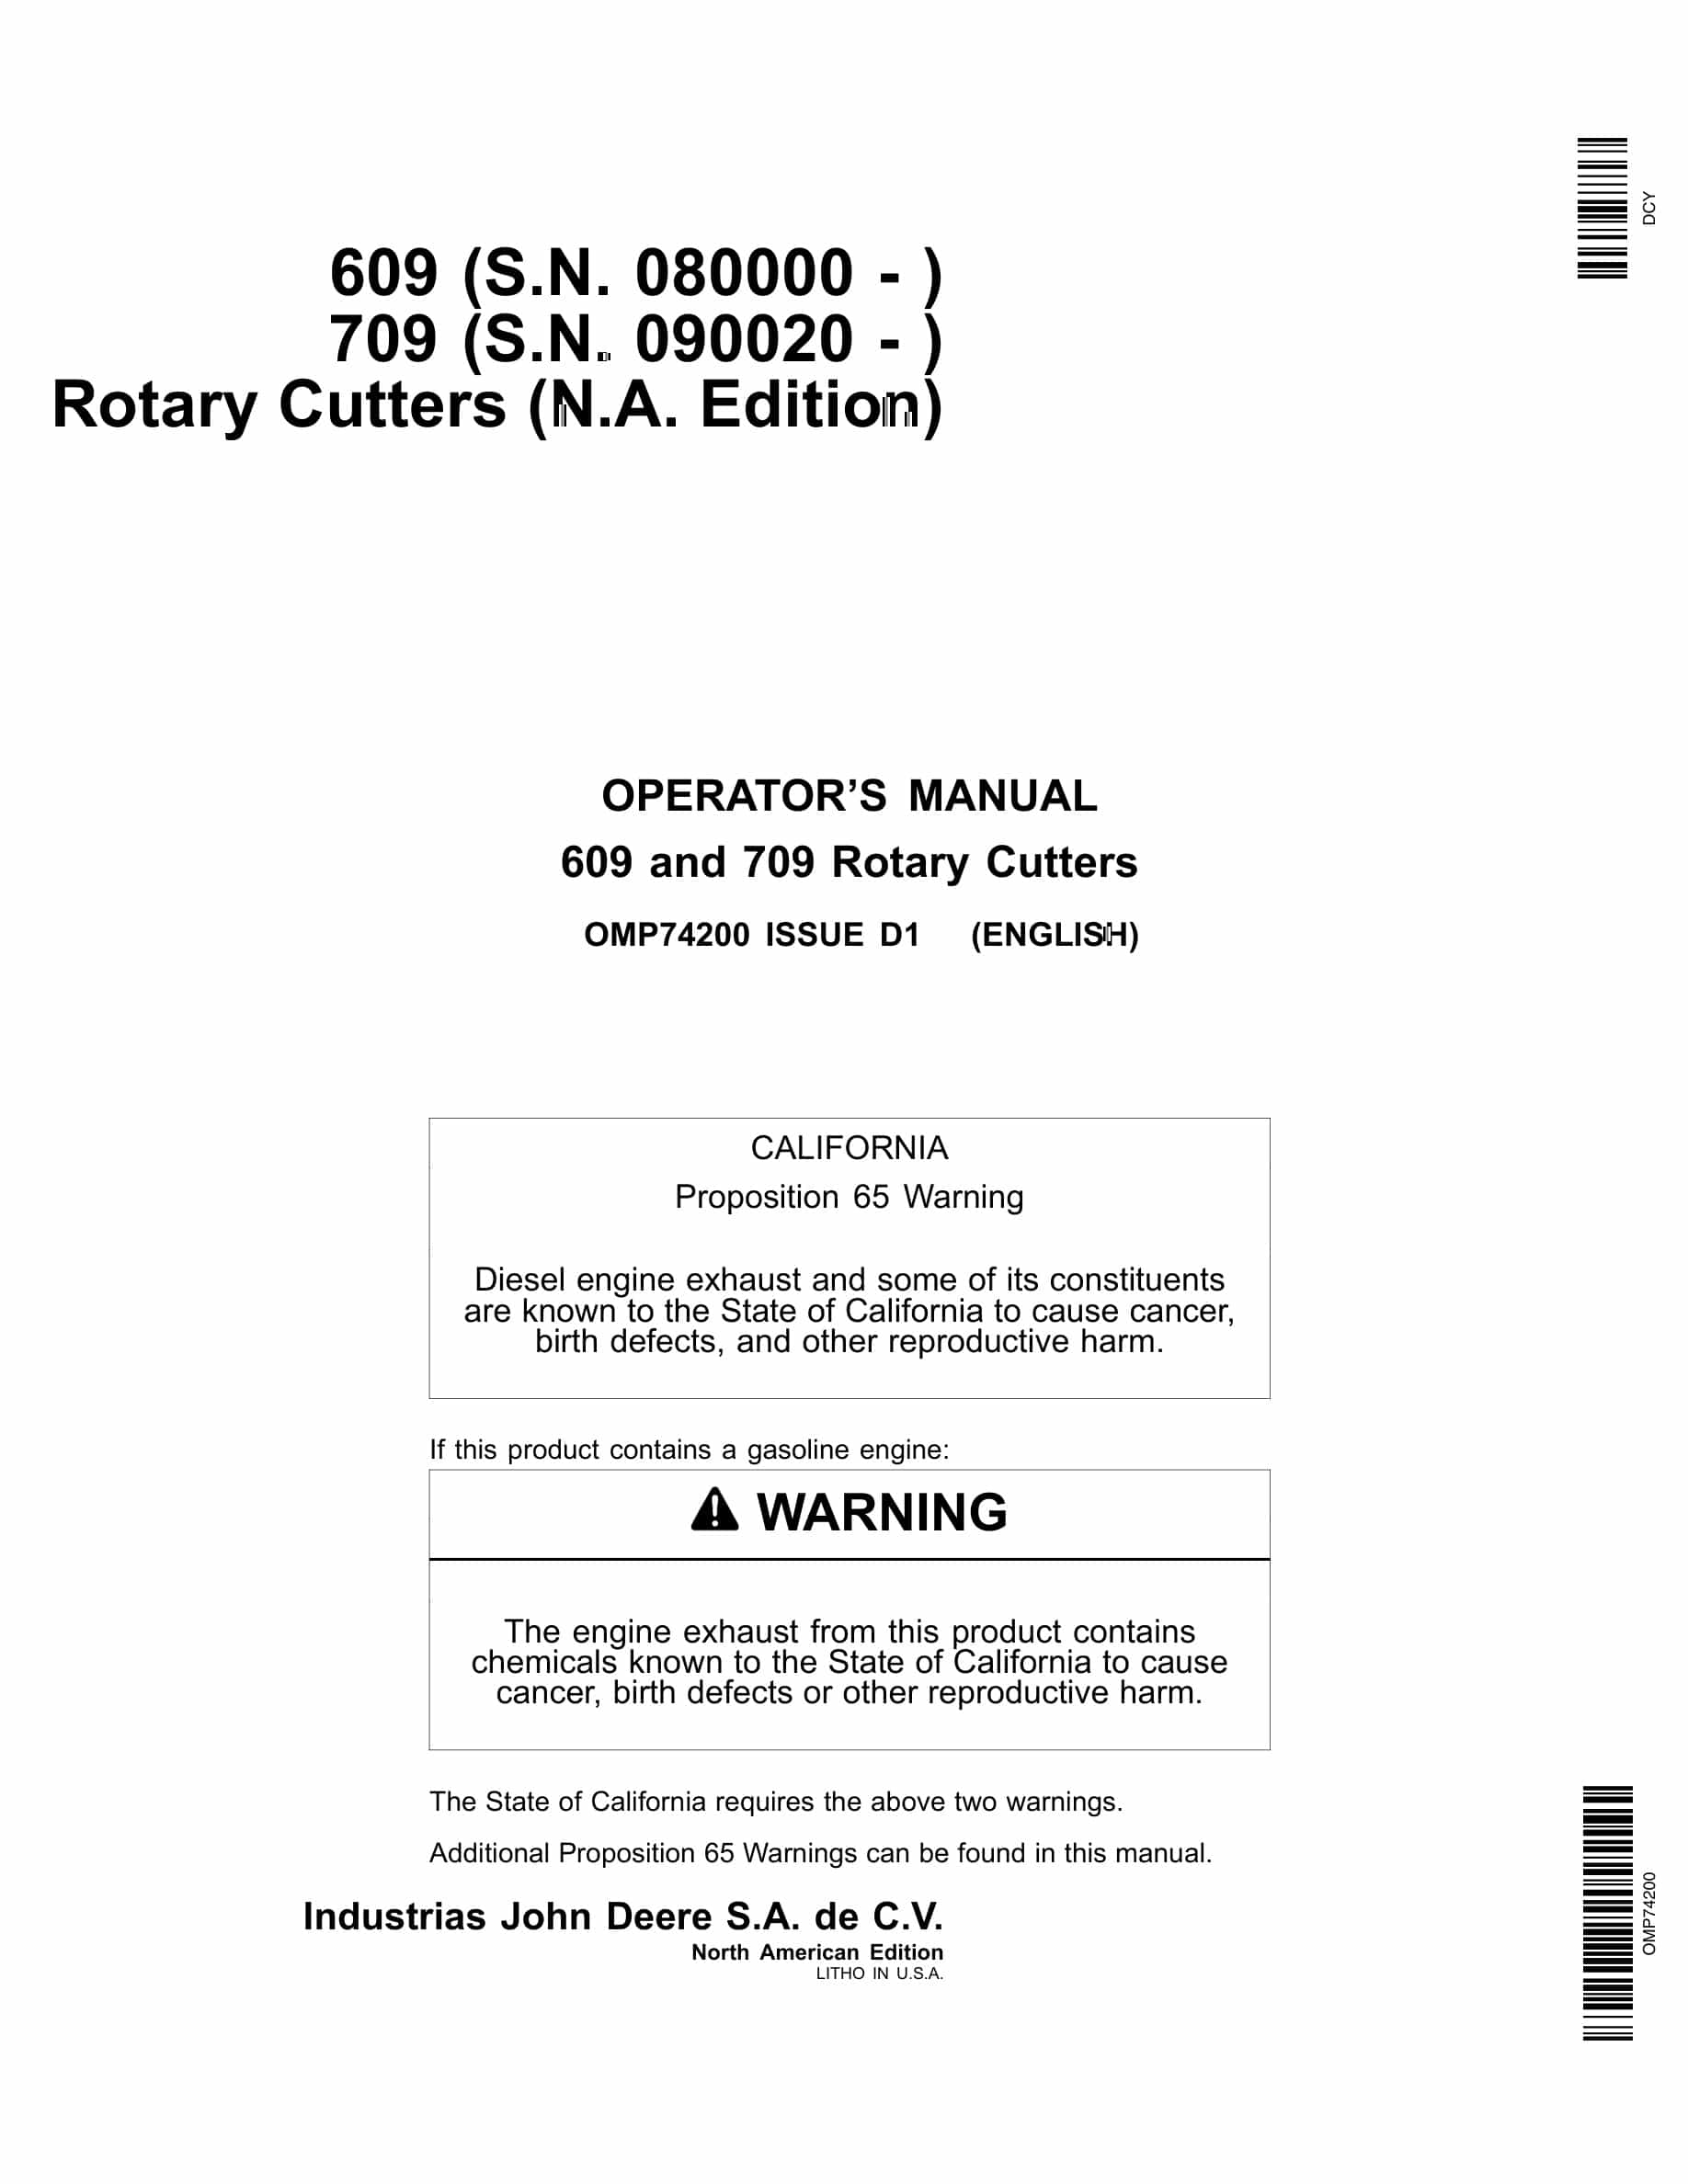 John Deere 609 709 Rotary Cutter Operator Manual OMP74200-1